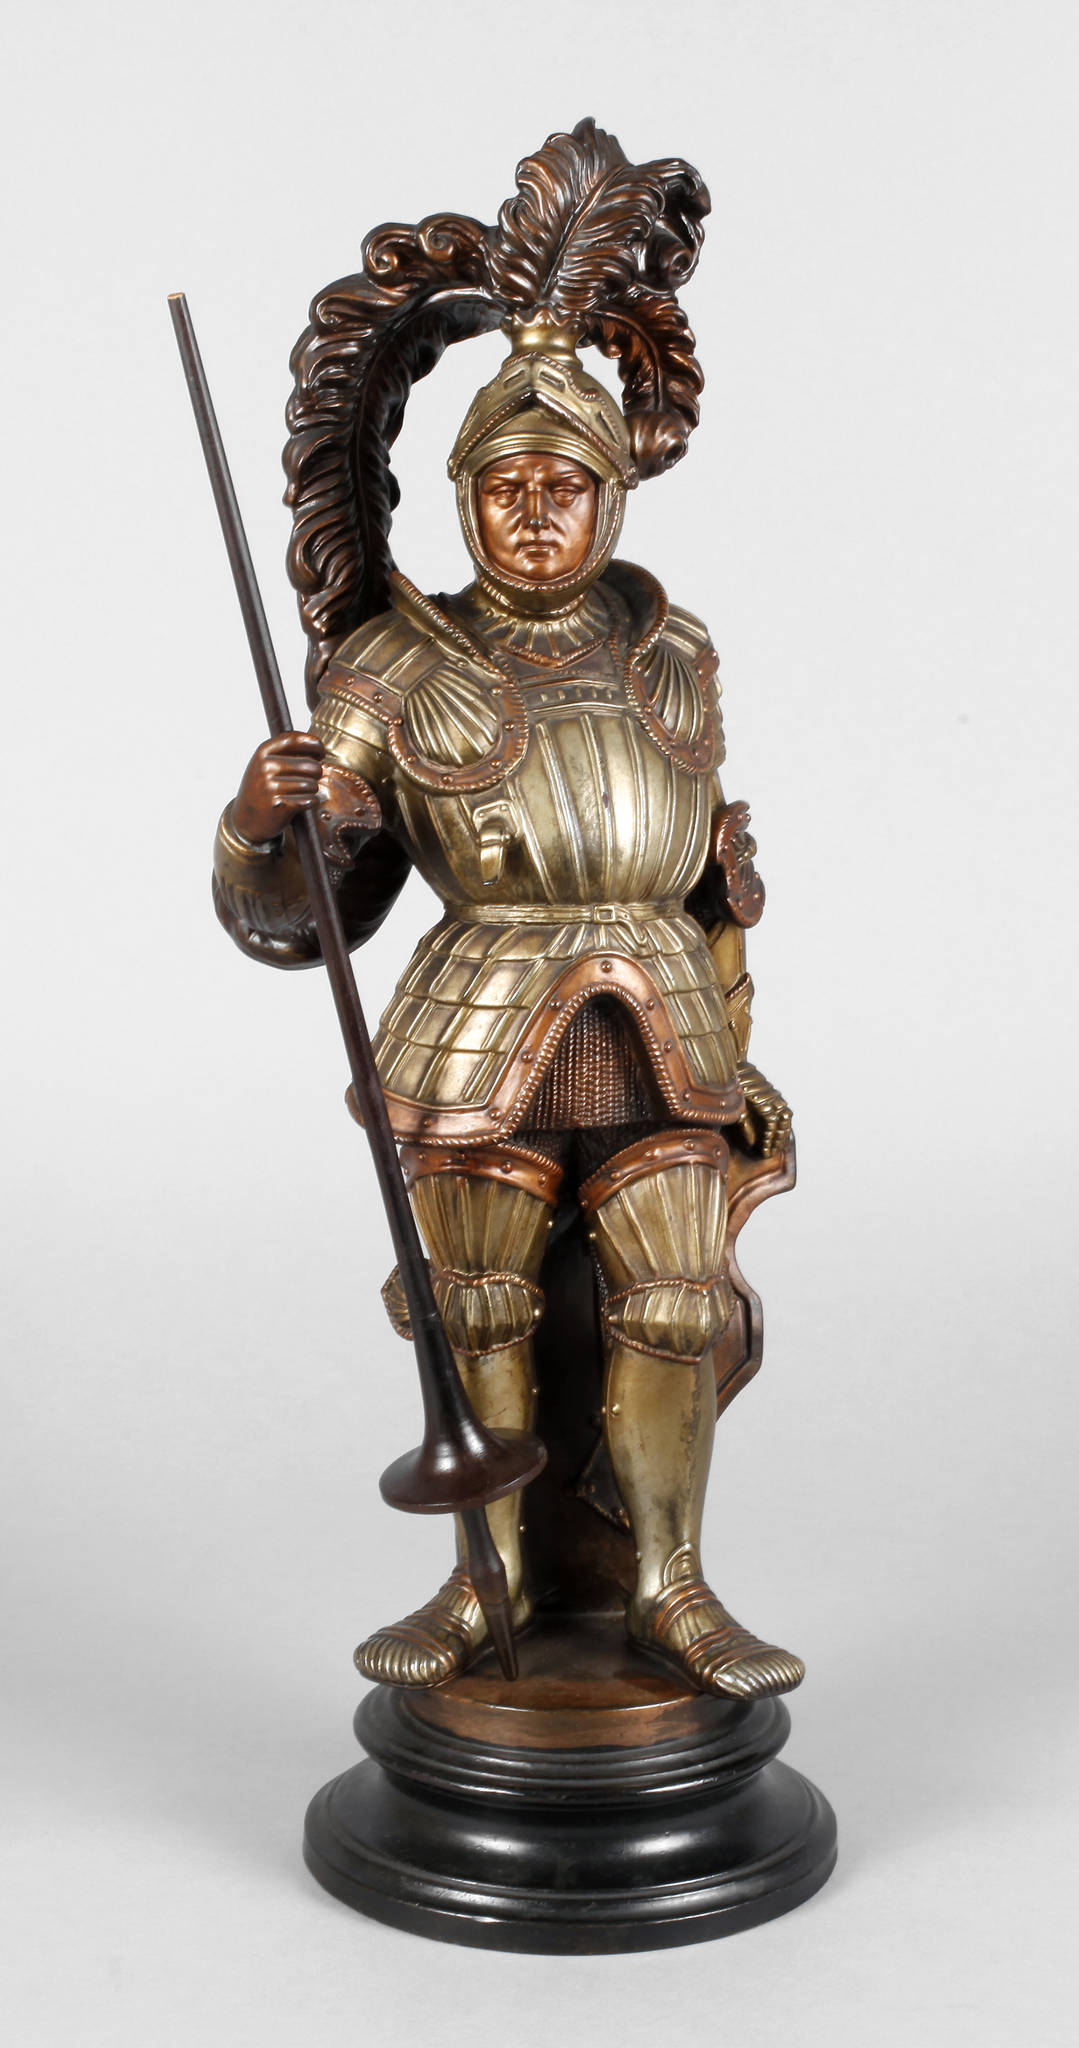 Große Keramikfigur Ritter mit Lanze